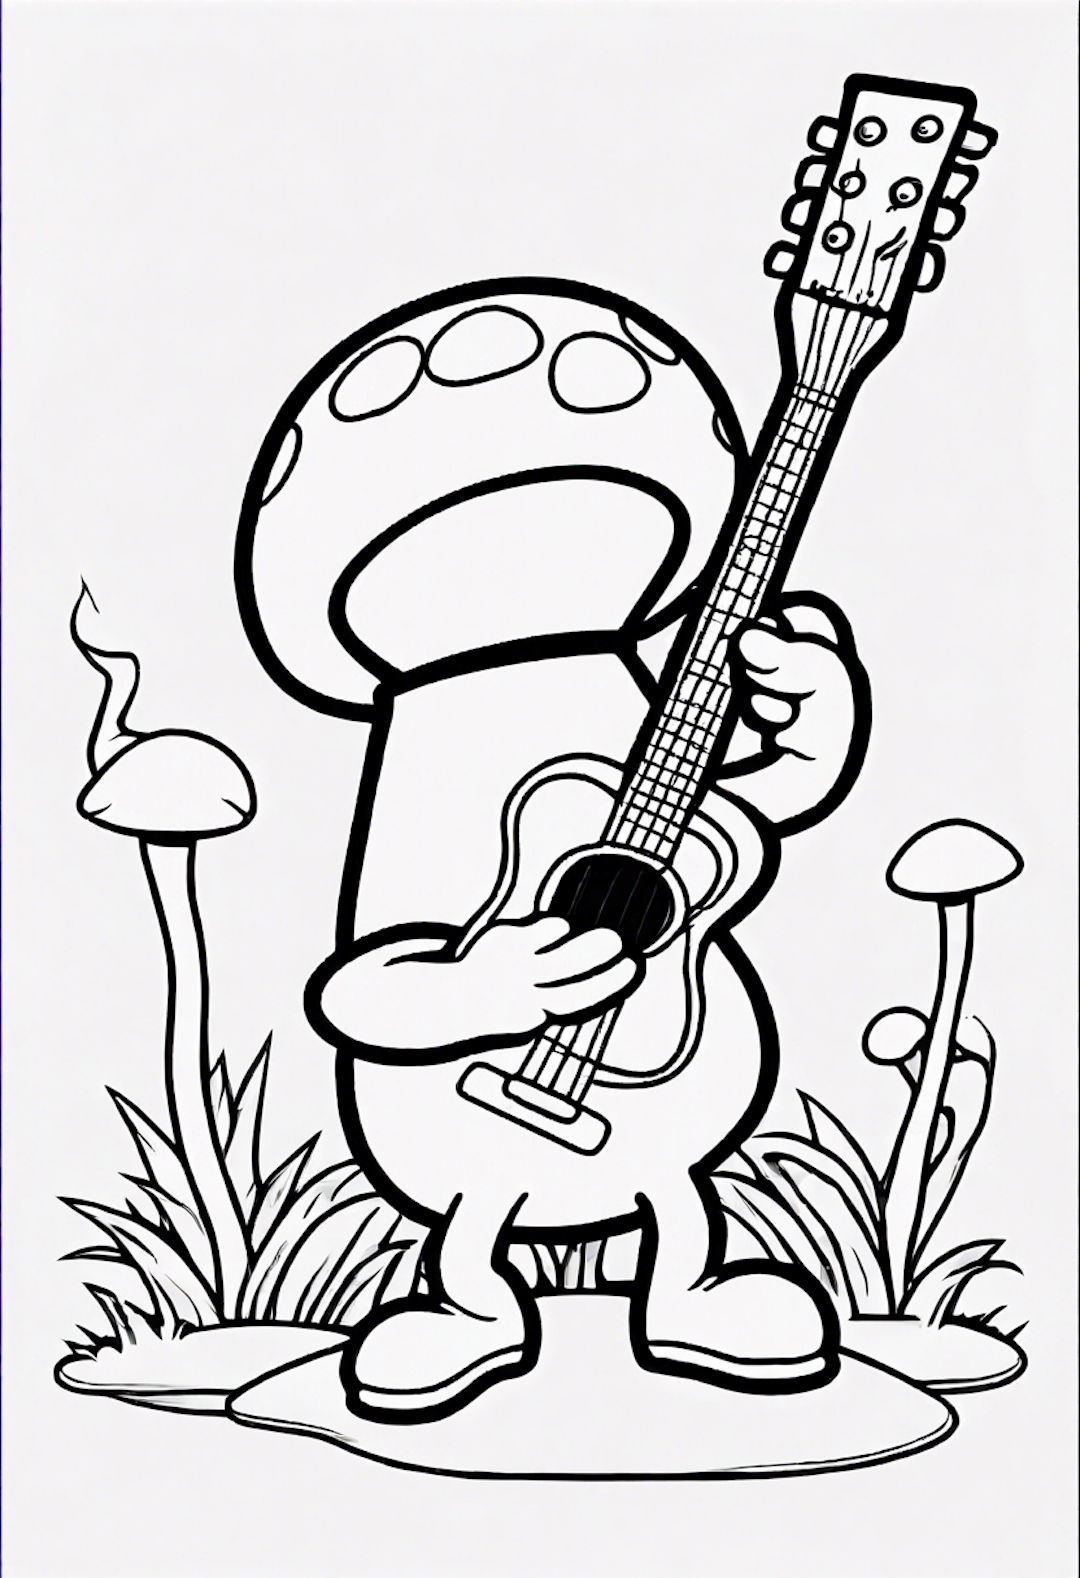 A Cartoon Mushroom Playing A Guitar